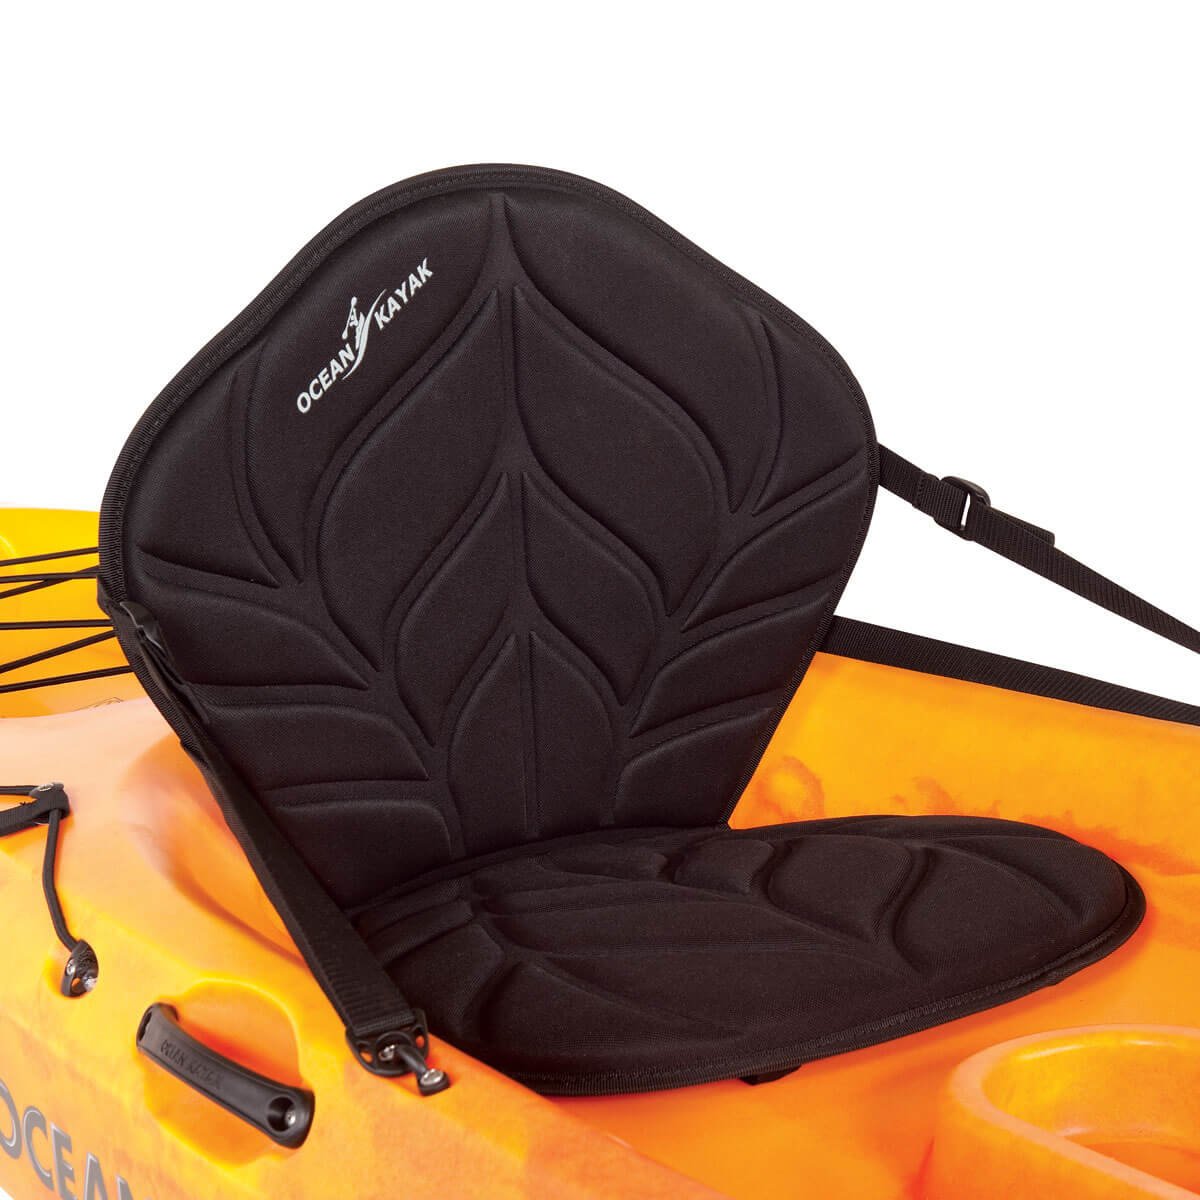 Ocean Kayak COMFORT HYBRID SOT SEAT